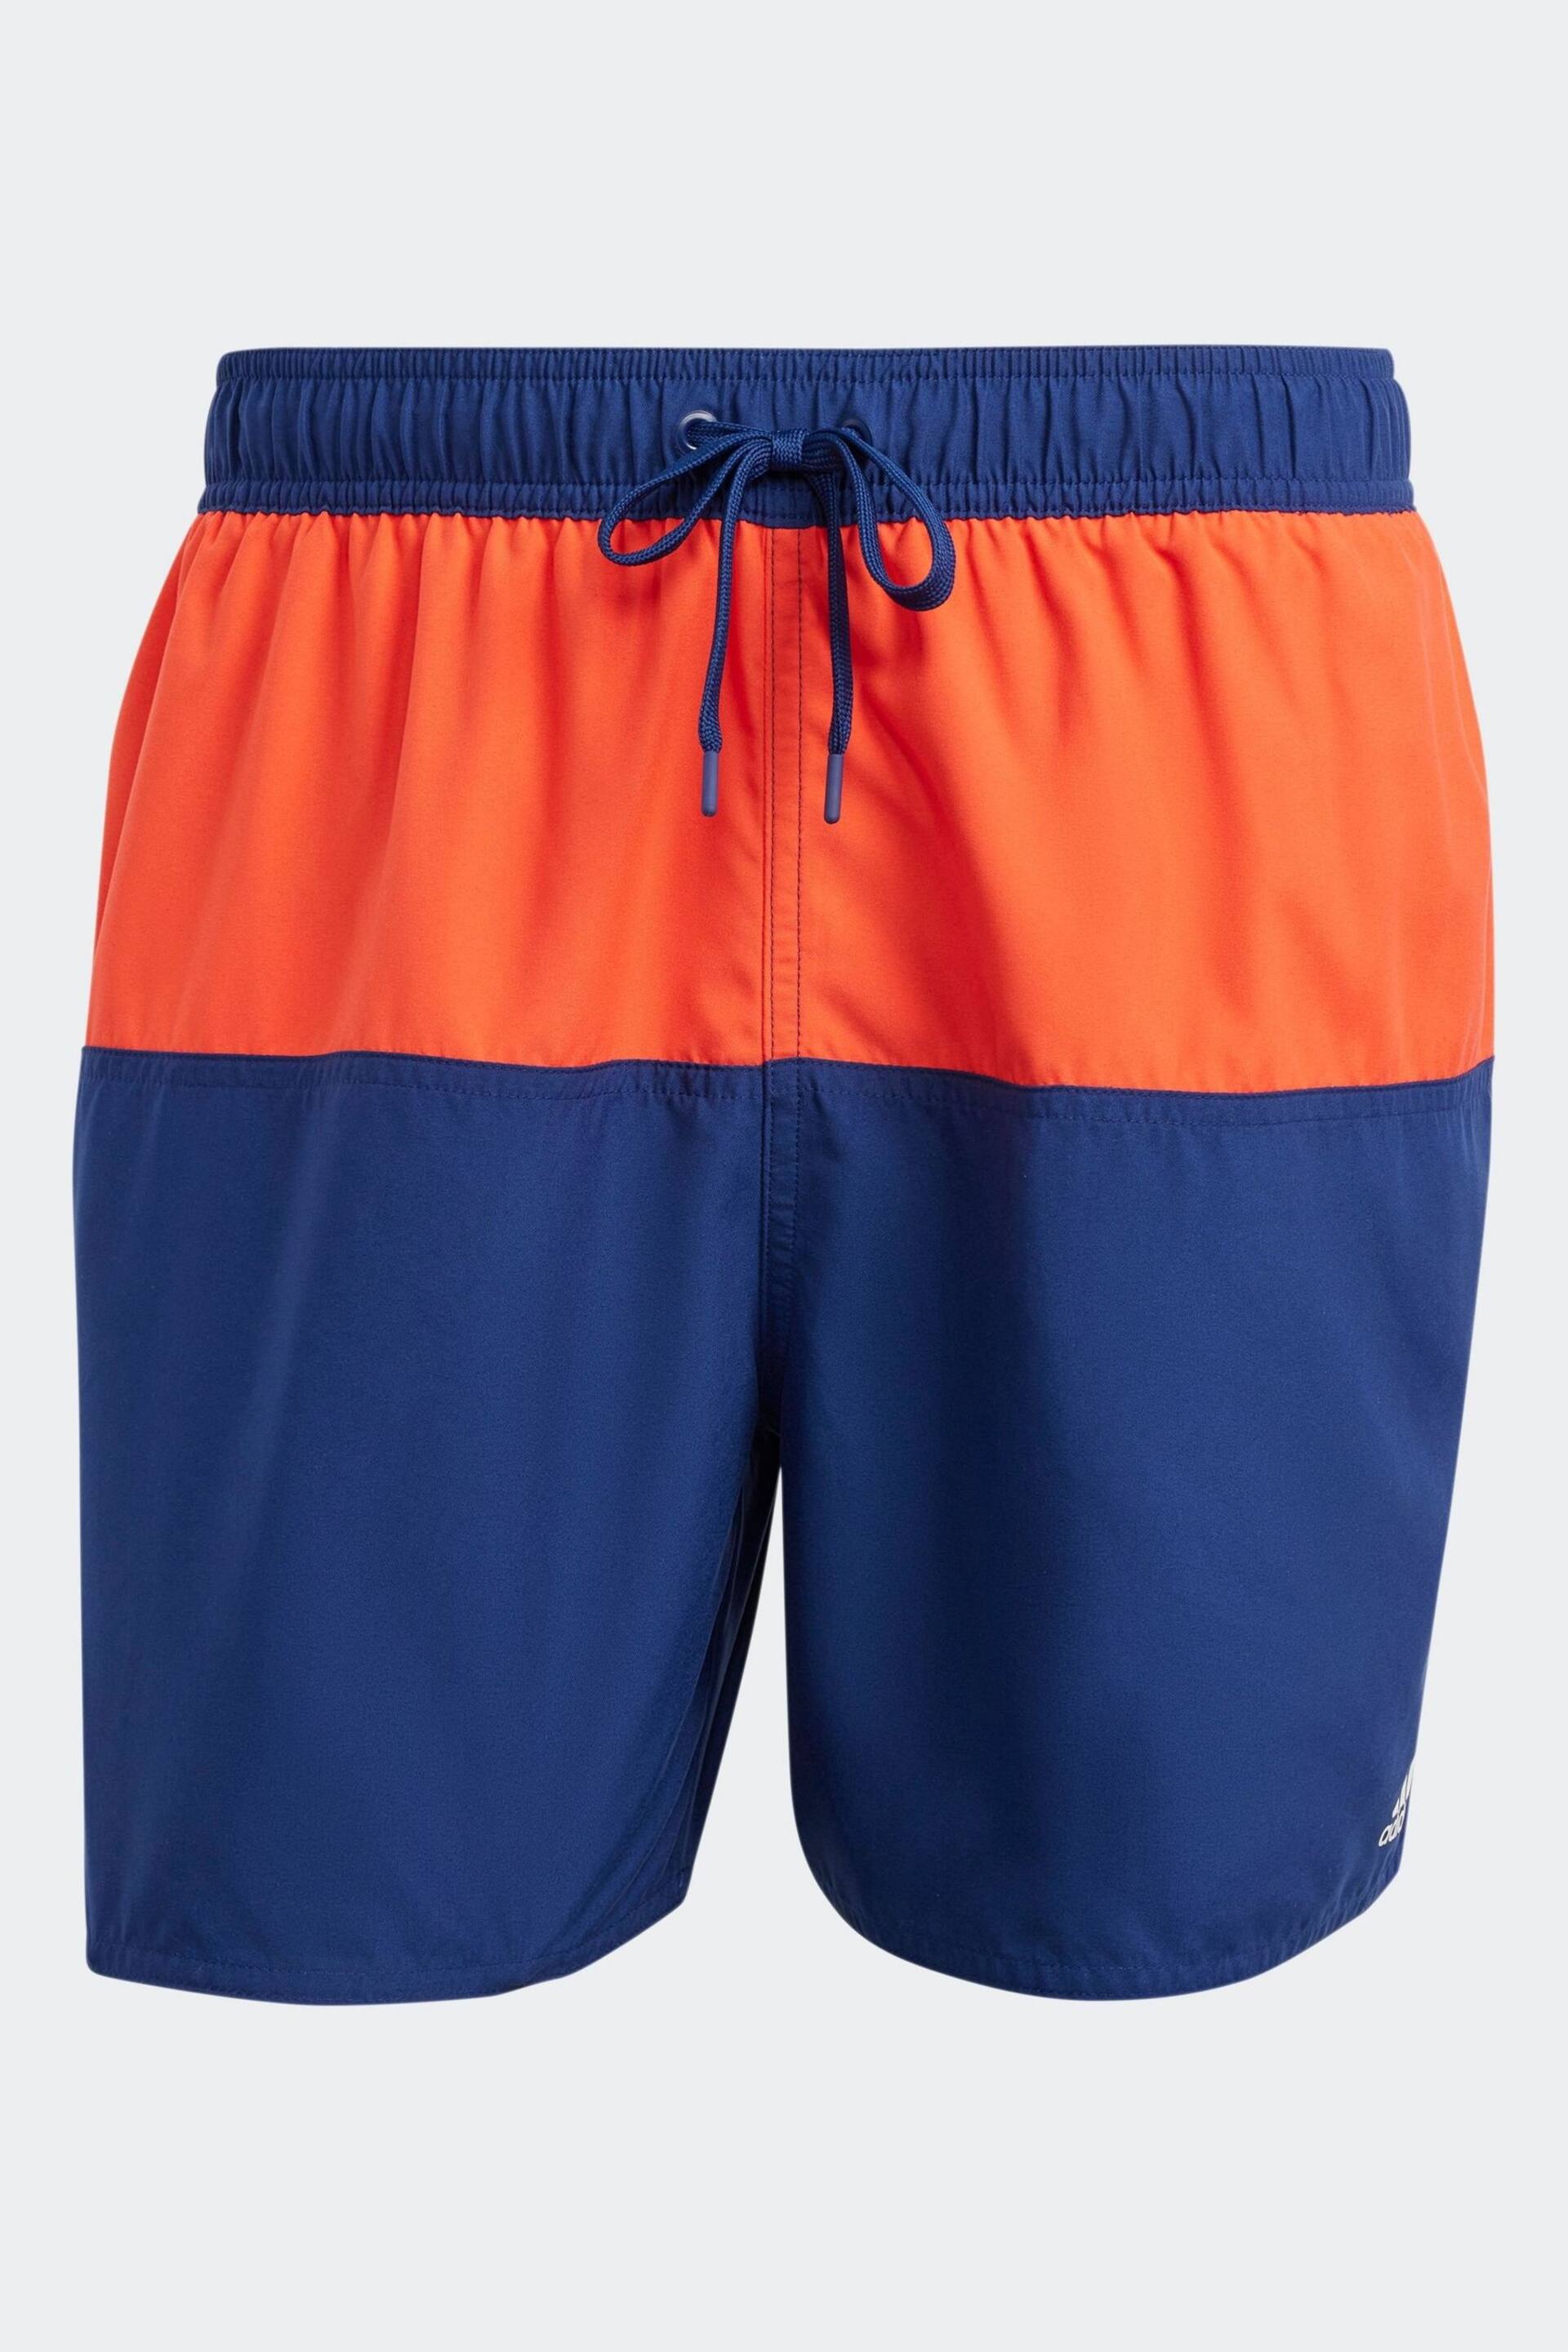 adidas Blue Colorblock Clx Swim Shorts - Image 4 of 6